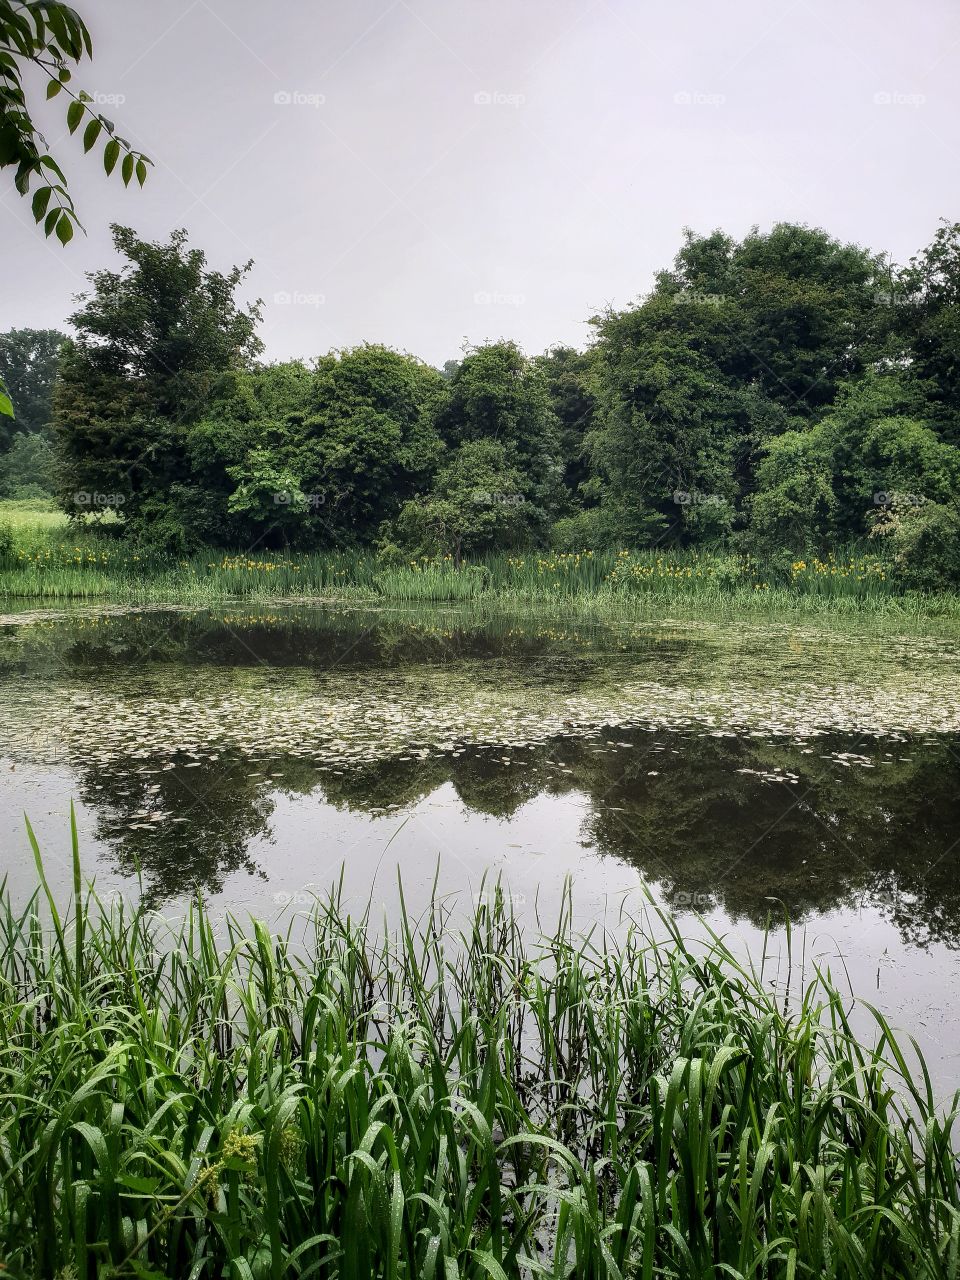 nature reserve pond